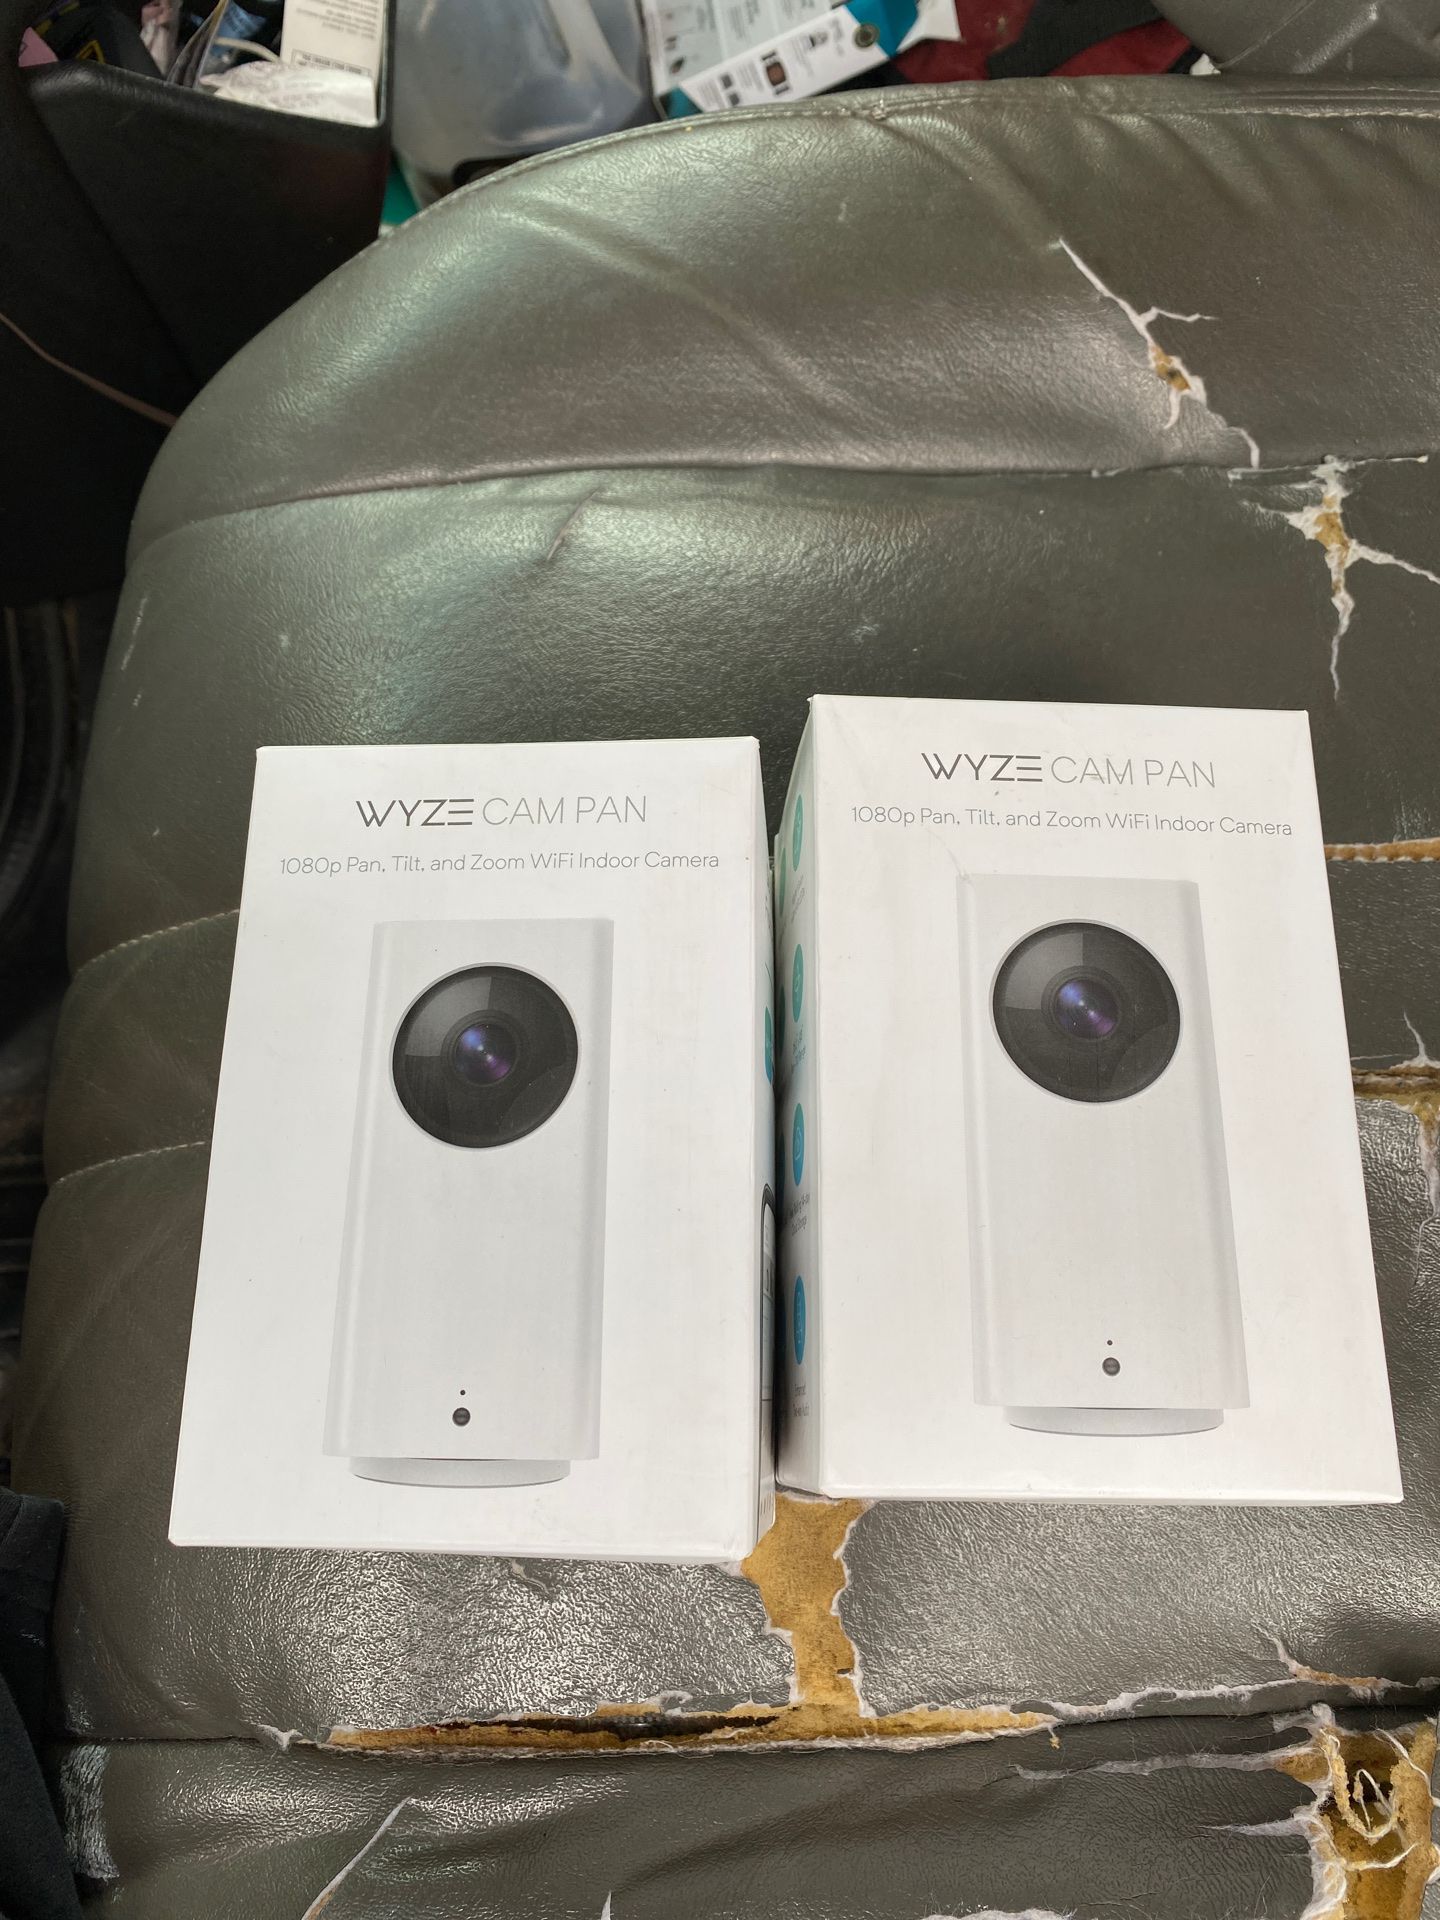 Brand new WYZE cam pen 1080 P pan tilt and zoom Wi-Fi indoor camera